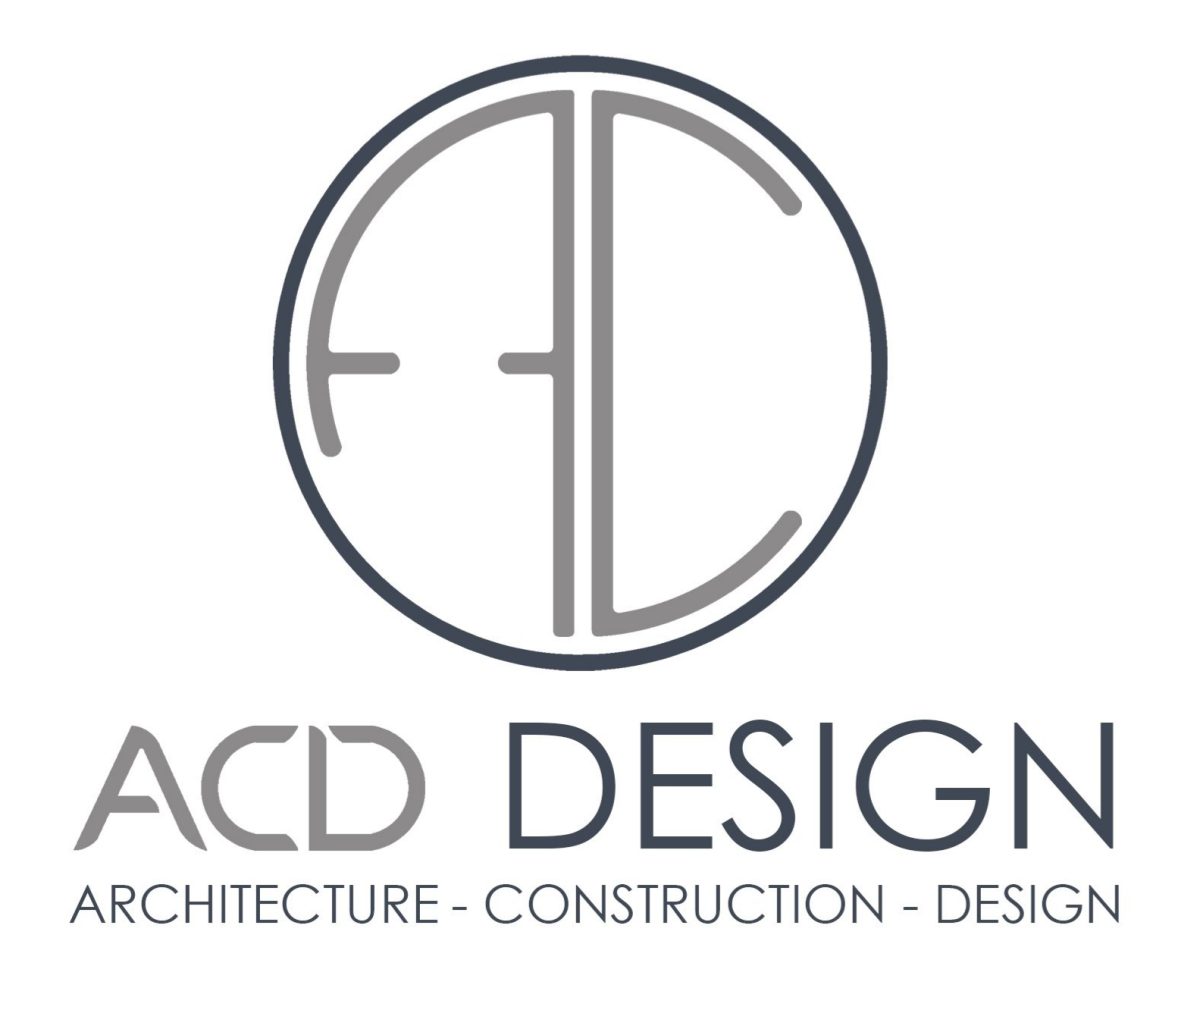 ARCHITECTURE – CONSTRUCTION – DESIGN